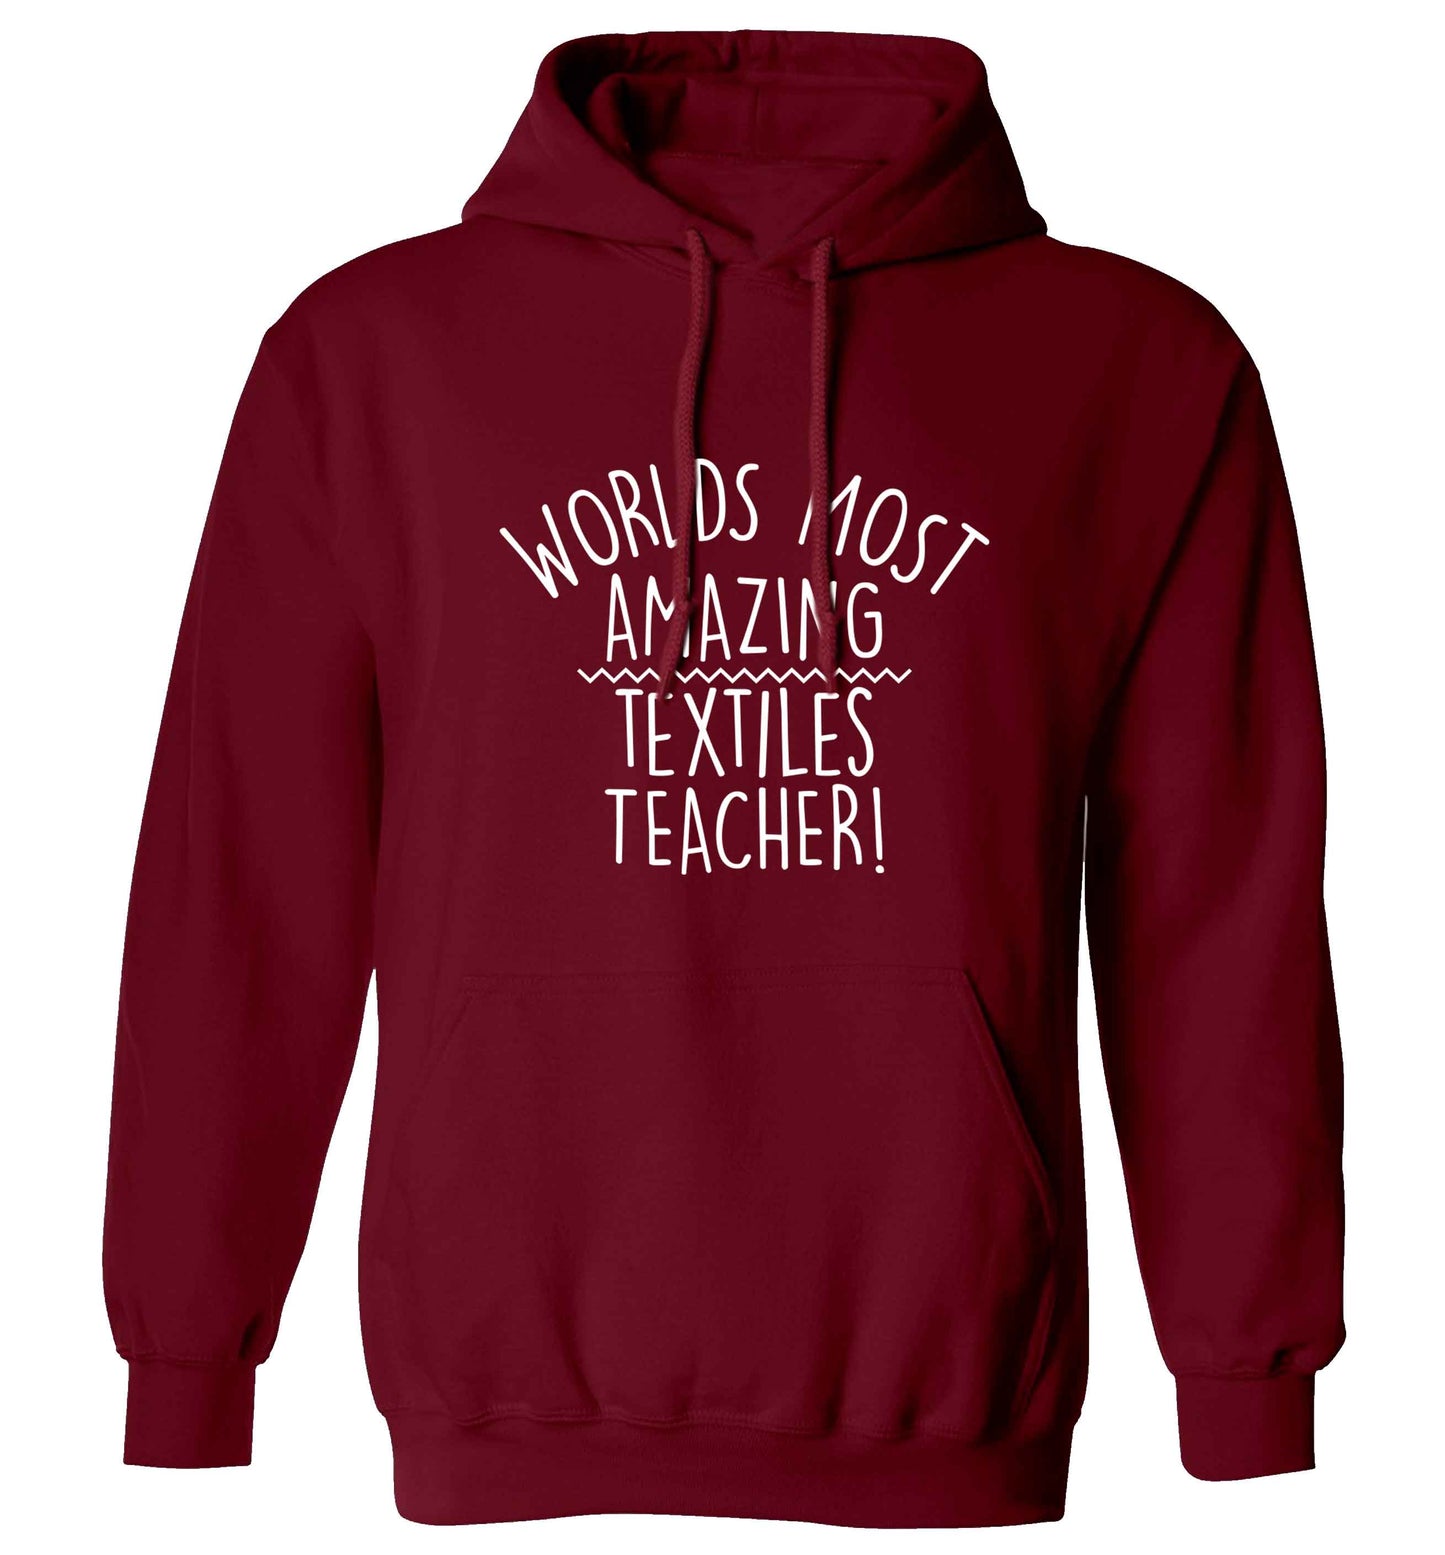 Worlds most amazing textiles teacher adults unisex maroon hoodie 2XL